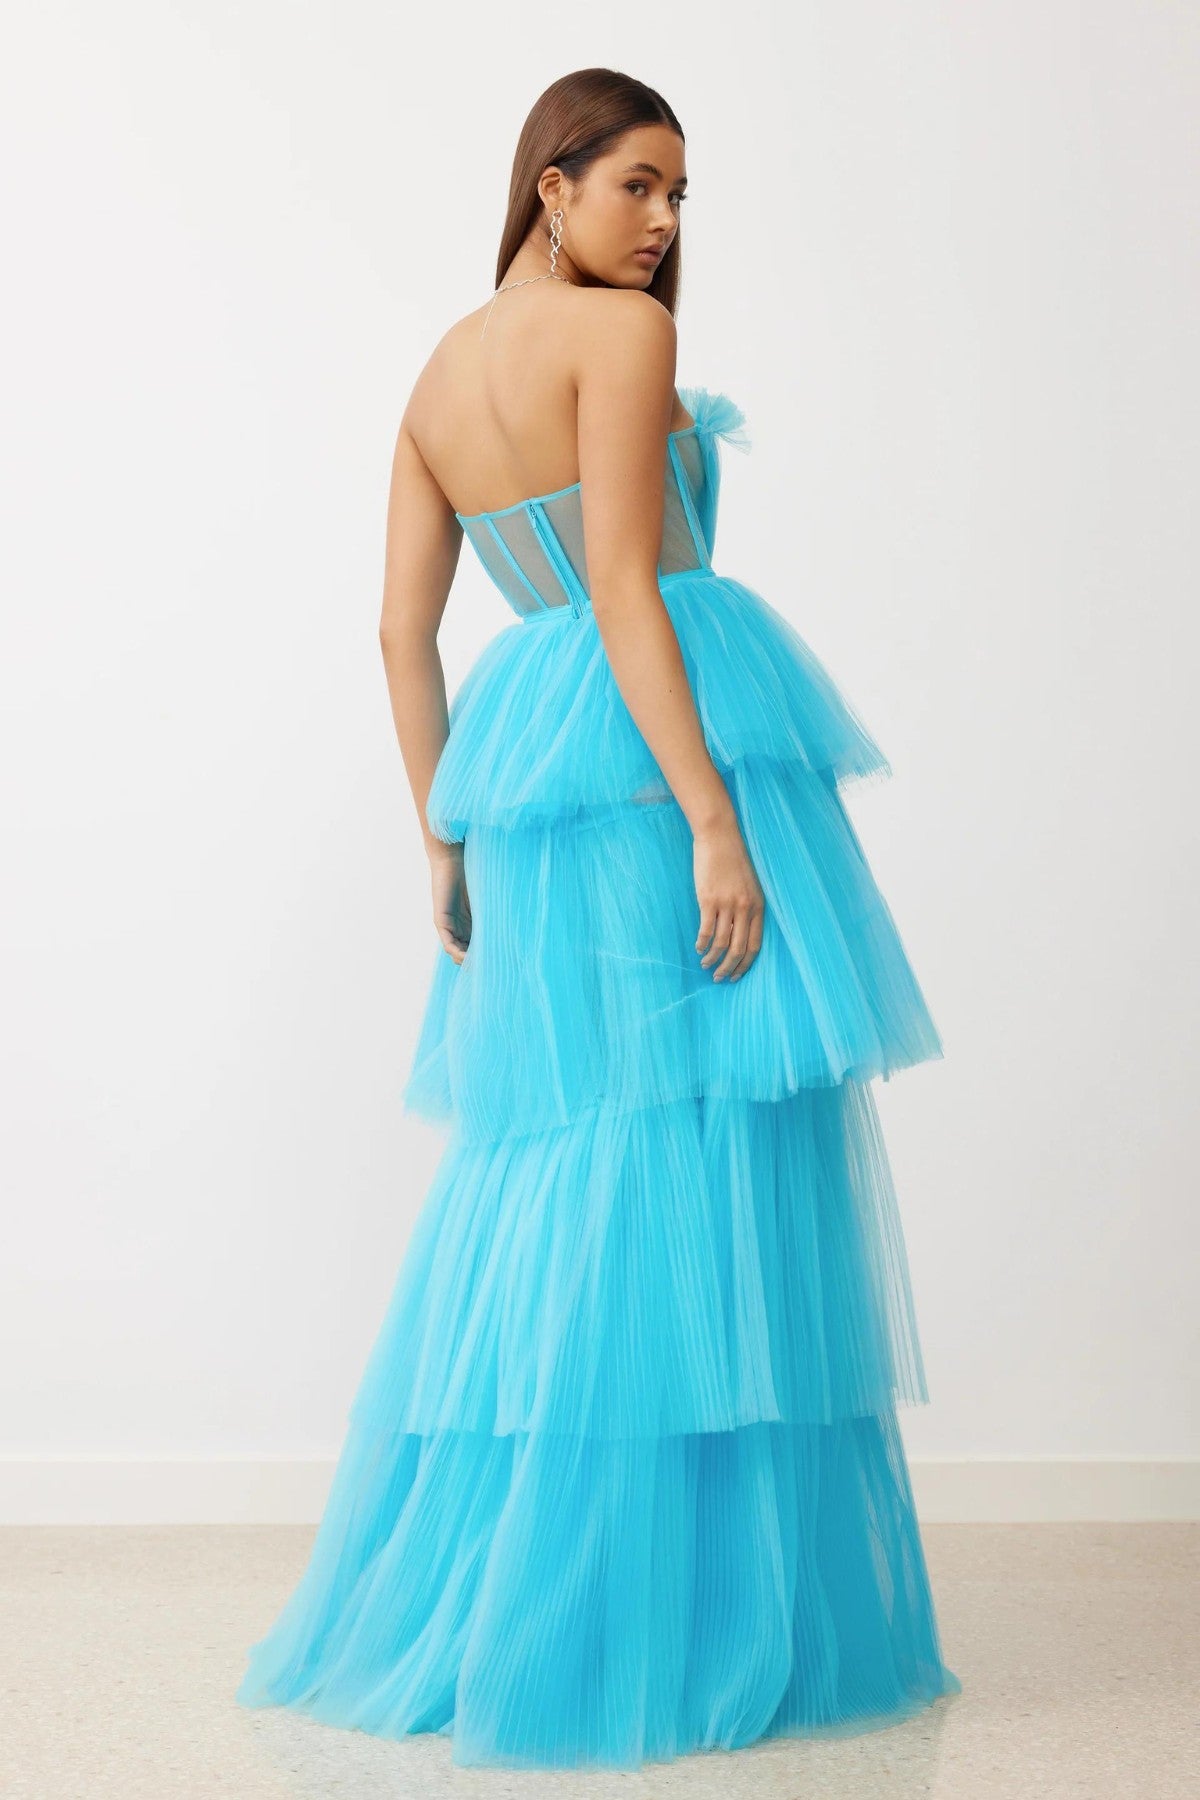 Tinaholy LEXI Cruz Dress (Turquoise Blue) - RRP $499 - 11_d2966815-5541-4ba2-80ca-906b77f292c2.jpg